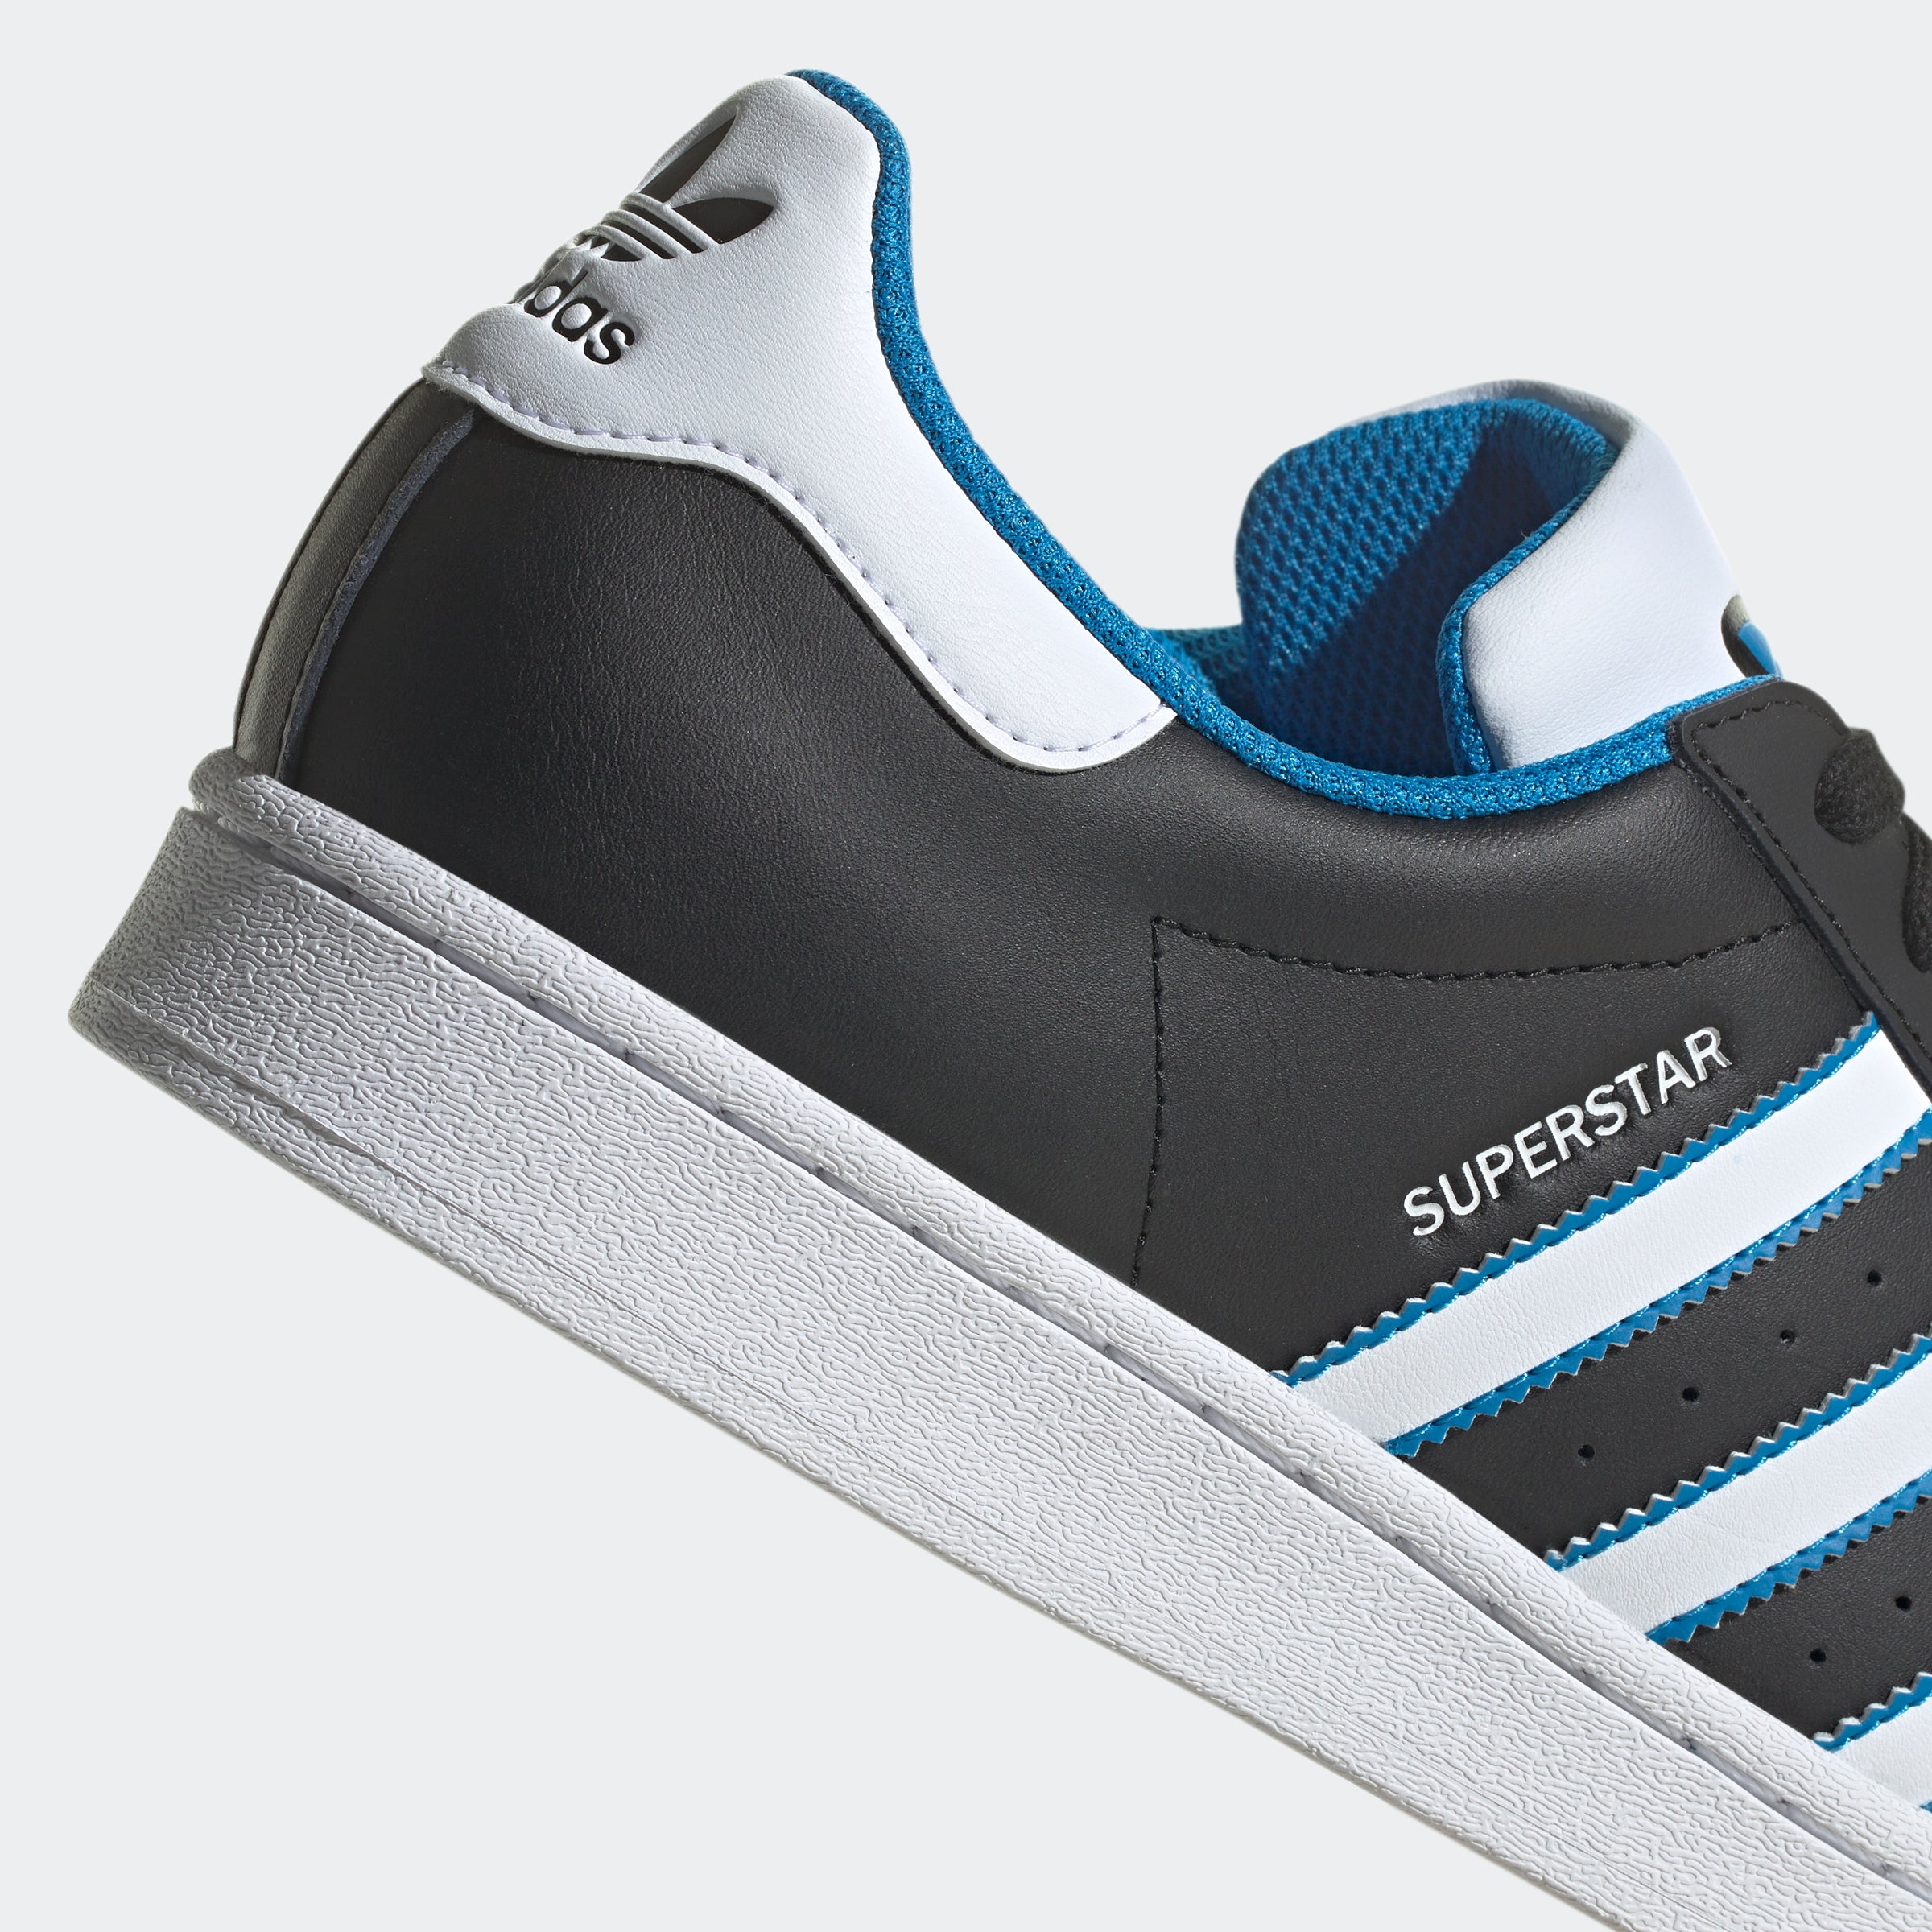 Adidas Men's Superstar Shoes